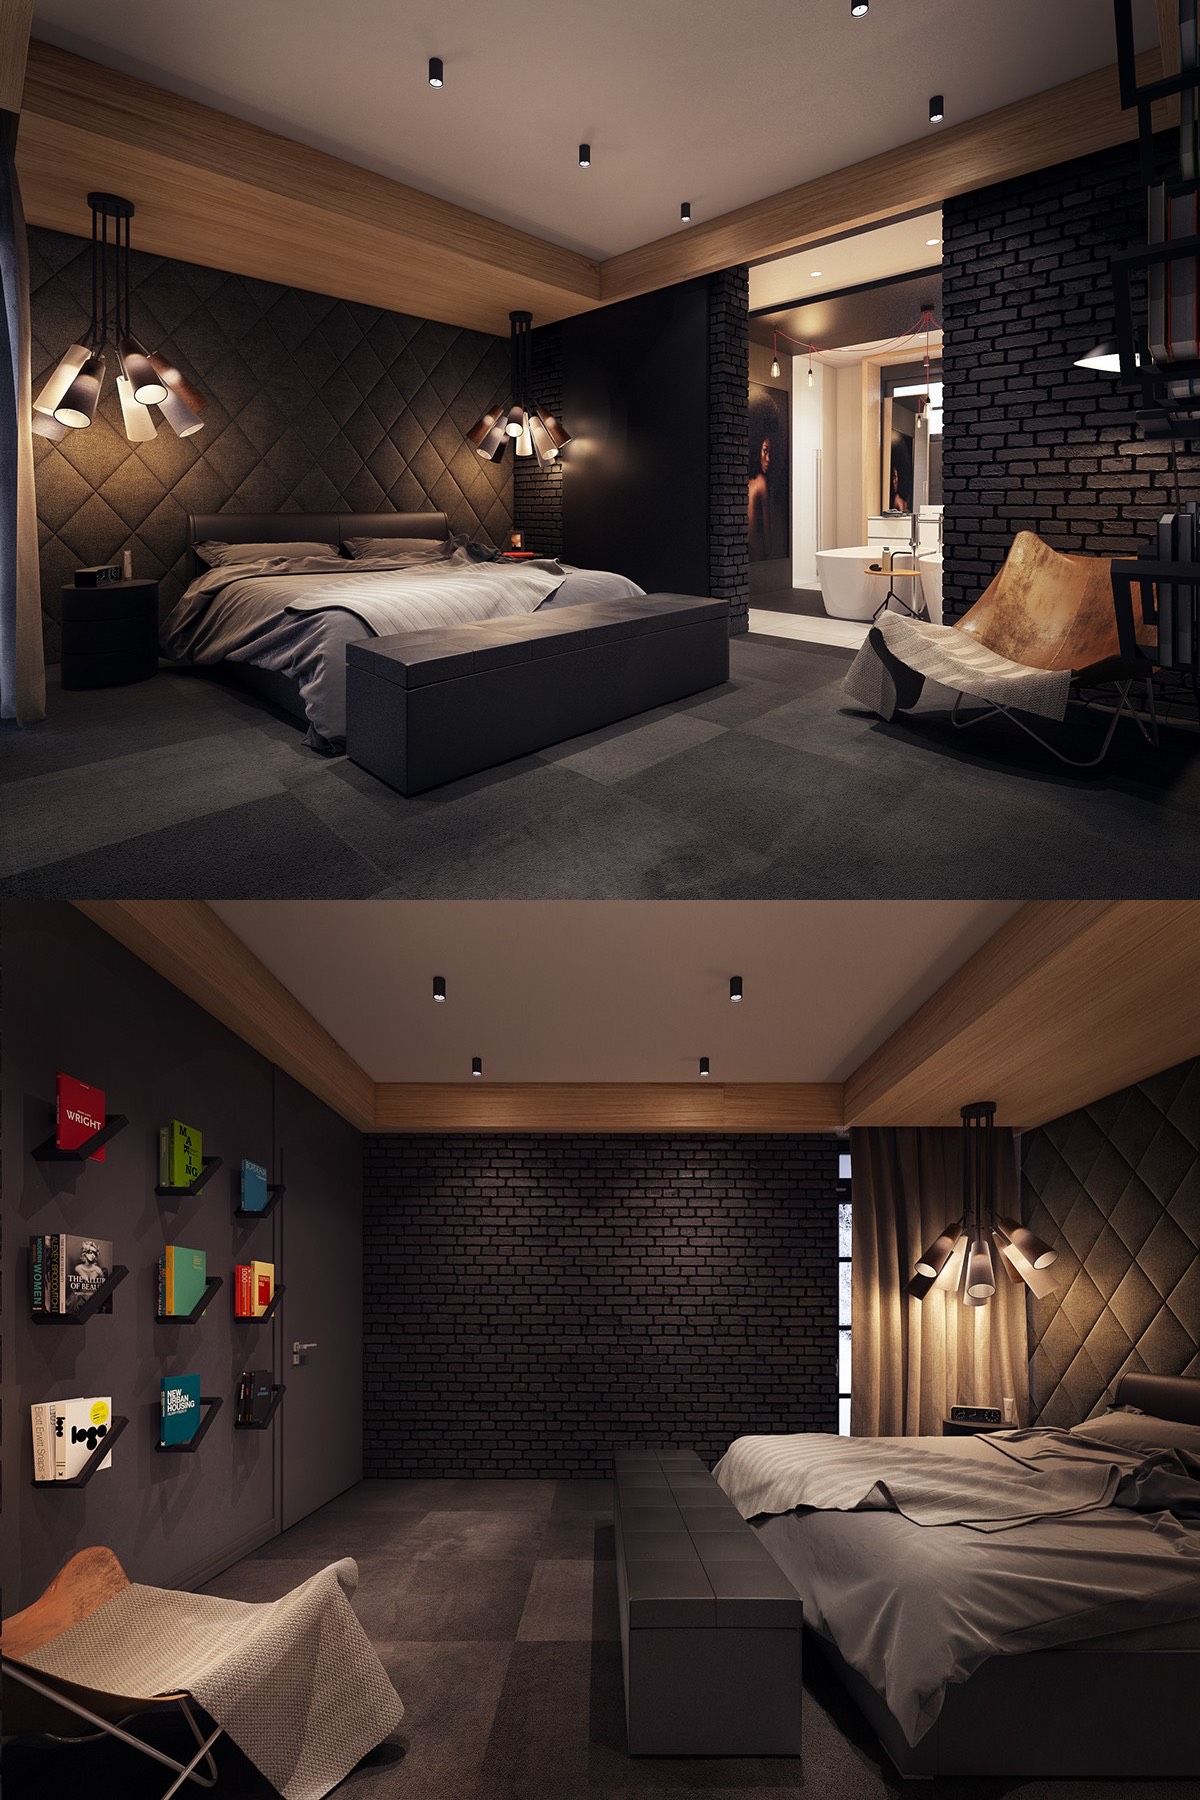 Inspiration for dark bedroom designs "width =" 1200 "height =" 1800 "srcset =" https://mileray.com/wp-content/uploads/2020/05/1588510451_598_Dark-Bedroom-Design-Ideas-and-Inspiration-To-Get-The-Relax.jpg 1200w, https://mileray.com /wp-content/uploads/2016/07/Jan-Wadim-200x300.jpg 200w, https://mileray.com/wp-content/uploads/2016/07/Jan-Wadim-768x1152.jpg 768w, https: / /mileray.com/wp-content/uploads/2016/07/Jan-Wadim-683x1024.jpg 683w, https://mileray.com/wp-content/uploads/2016/07/Jan-Wadim-696x1044.jpg 696w , https://mileray.com/wp-content/uploads/2016/07/Jan-Wadim-1068x1602.jpg 1068w, https://mileray.com/wp-content/uploads/2016/07/Jan-Wadim- 280x420.jpg 280w "sizes =" (maximum width: 1200px) 100vw, 1200px